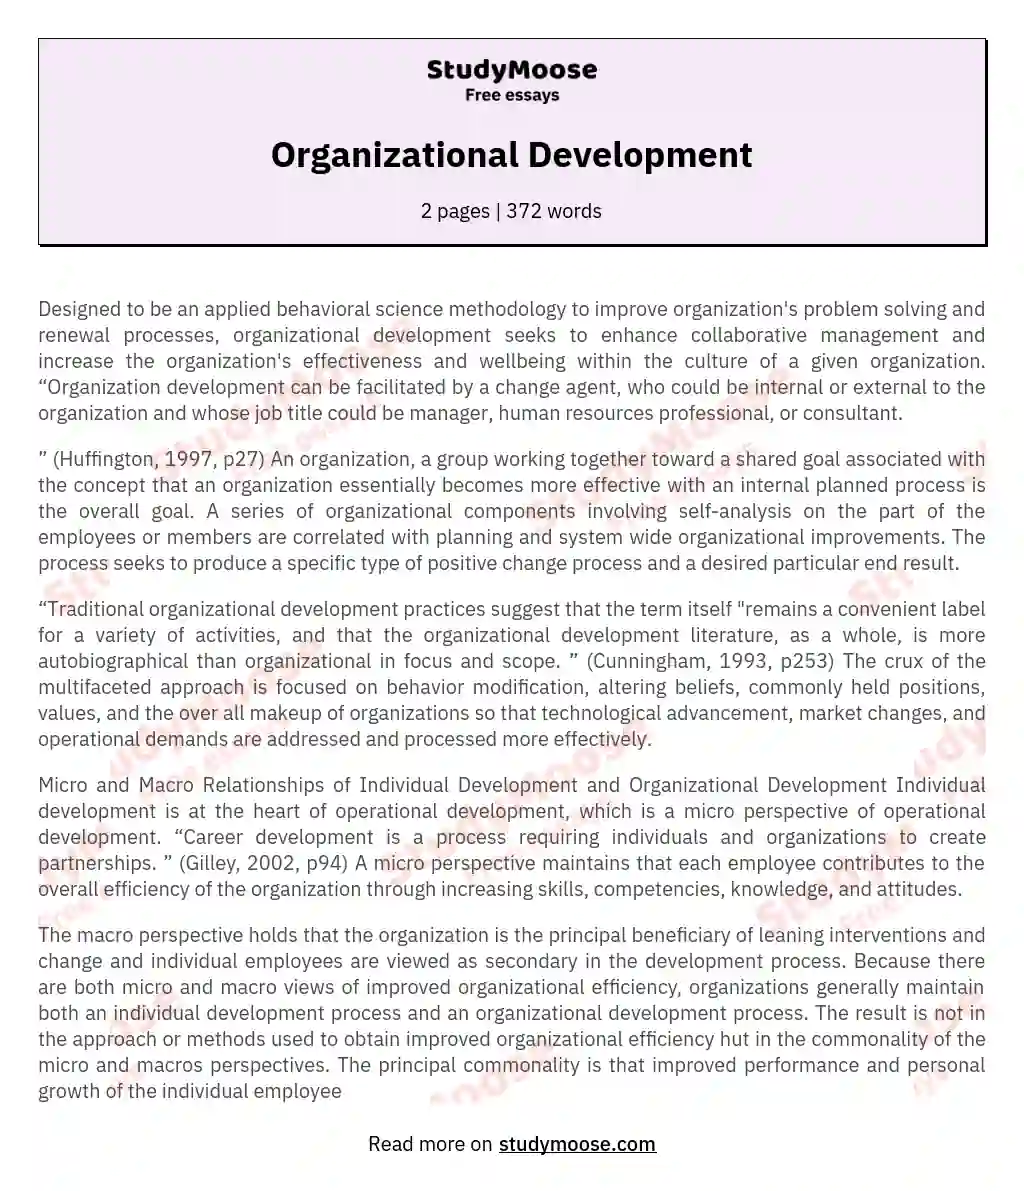 Organizational Development Free Essay Example